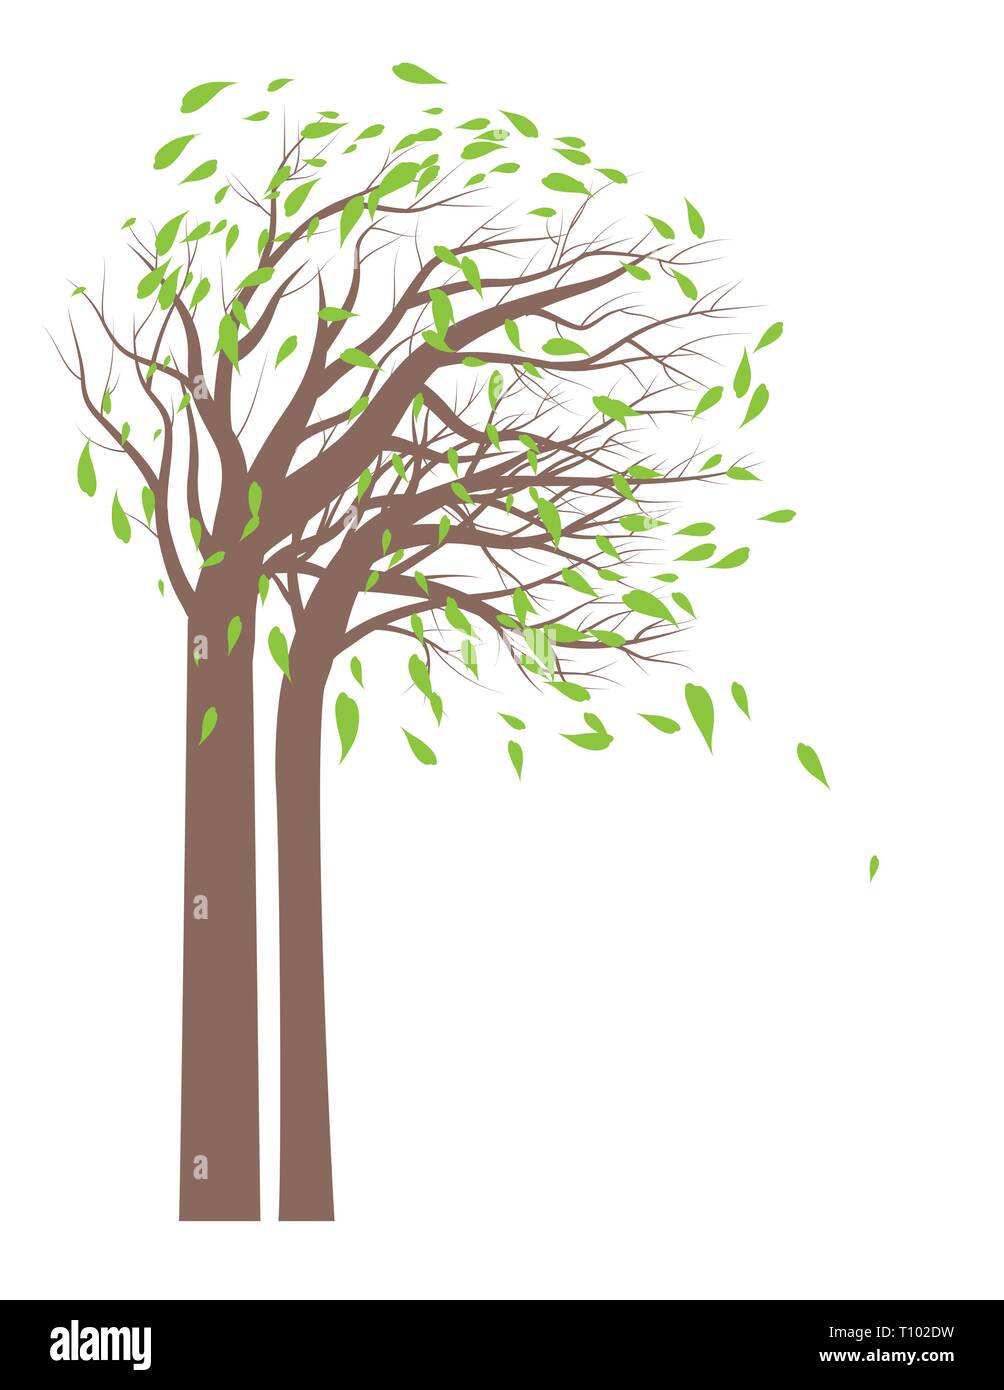 Bäume flachbild Abbildung. Jahreszeit Natur Element isoliert. Stock Vektor